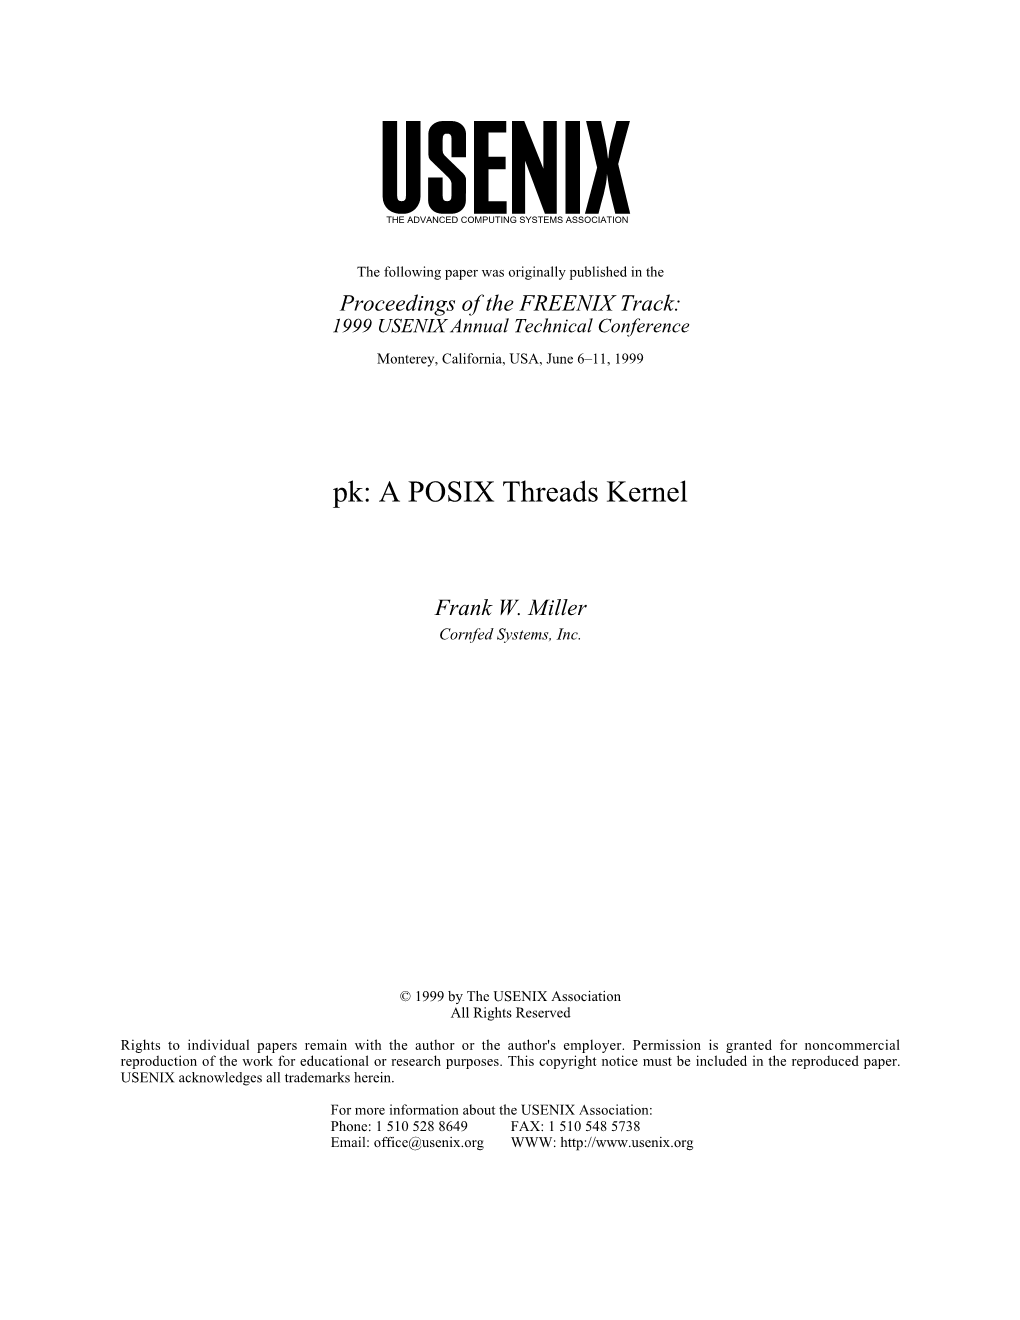 A POSIX Threads Kernel